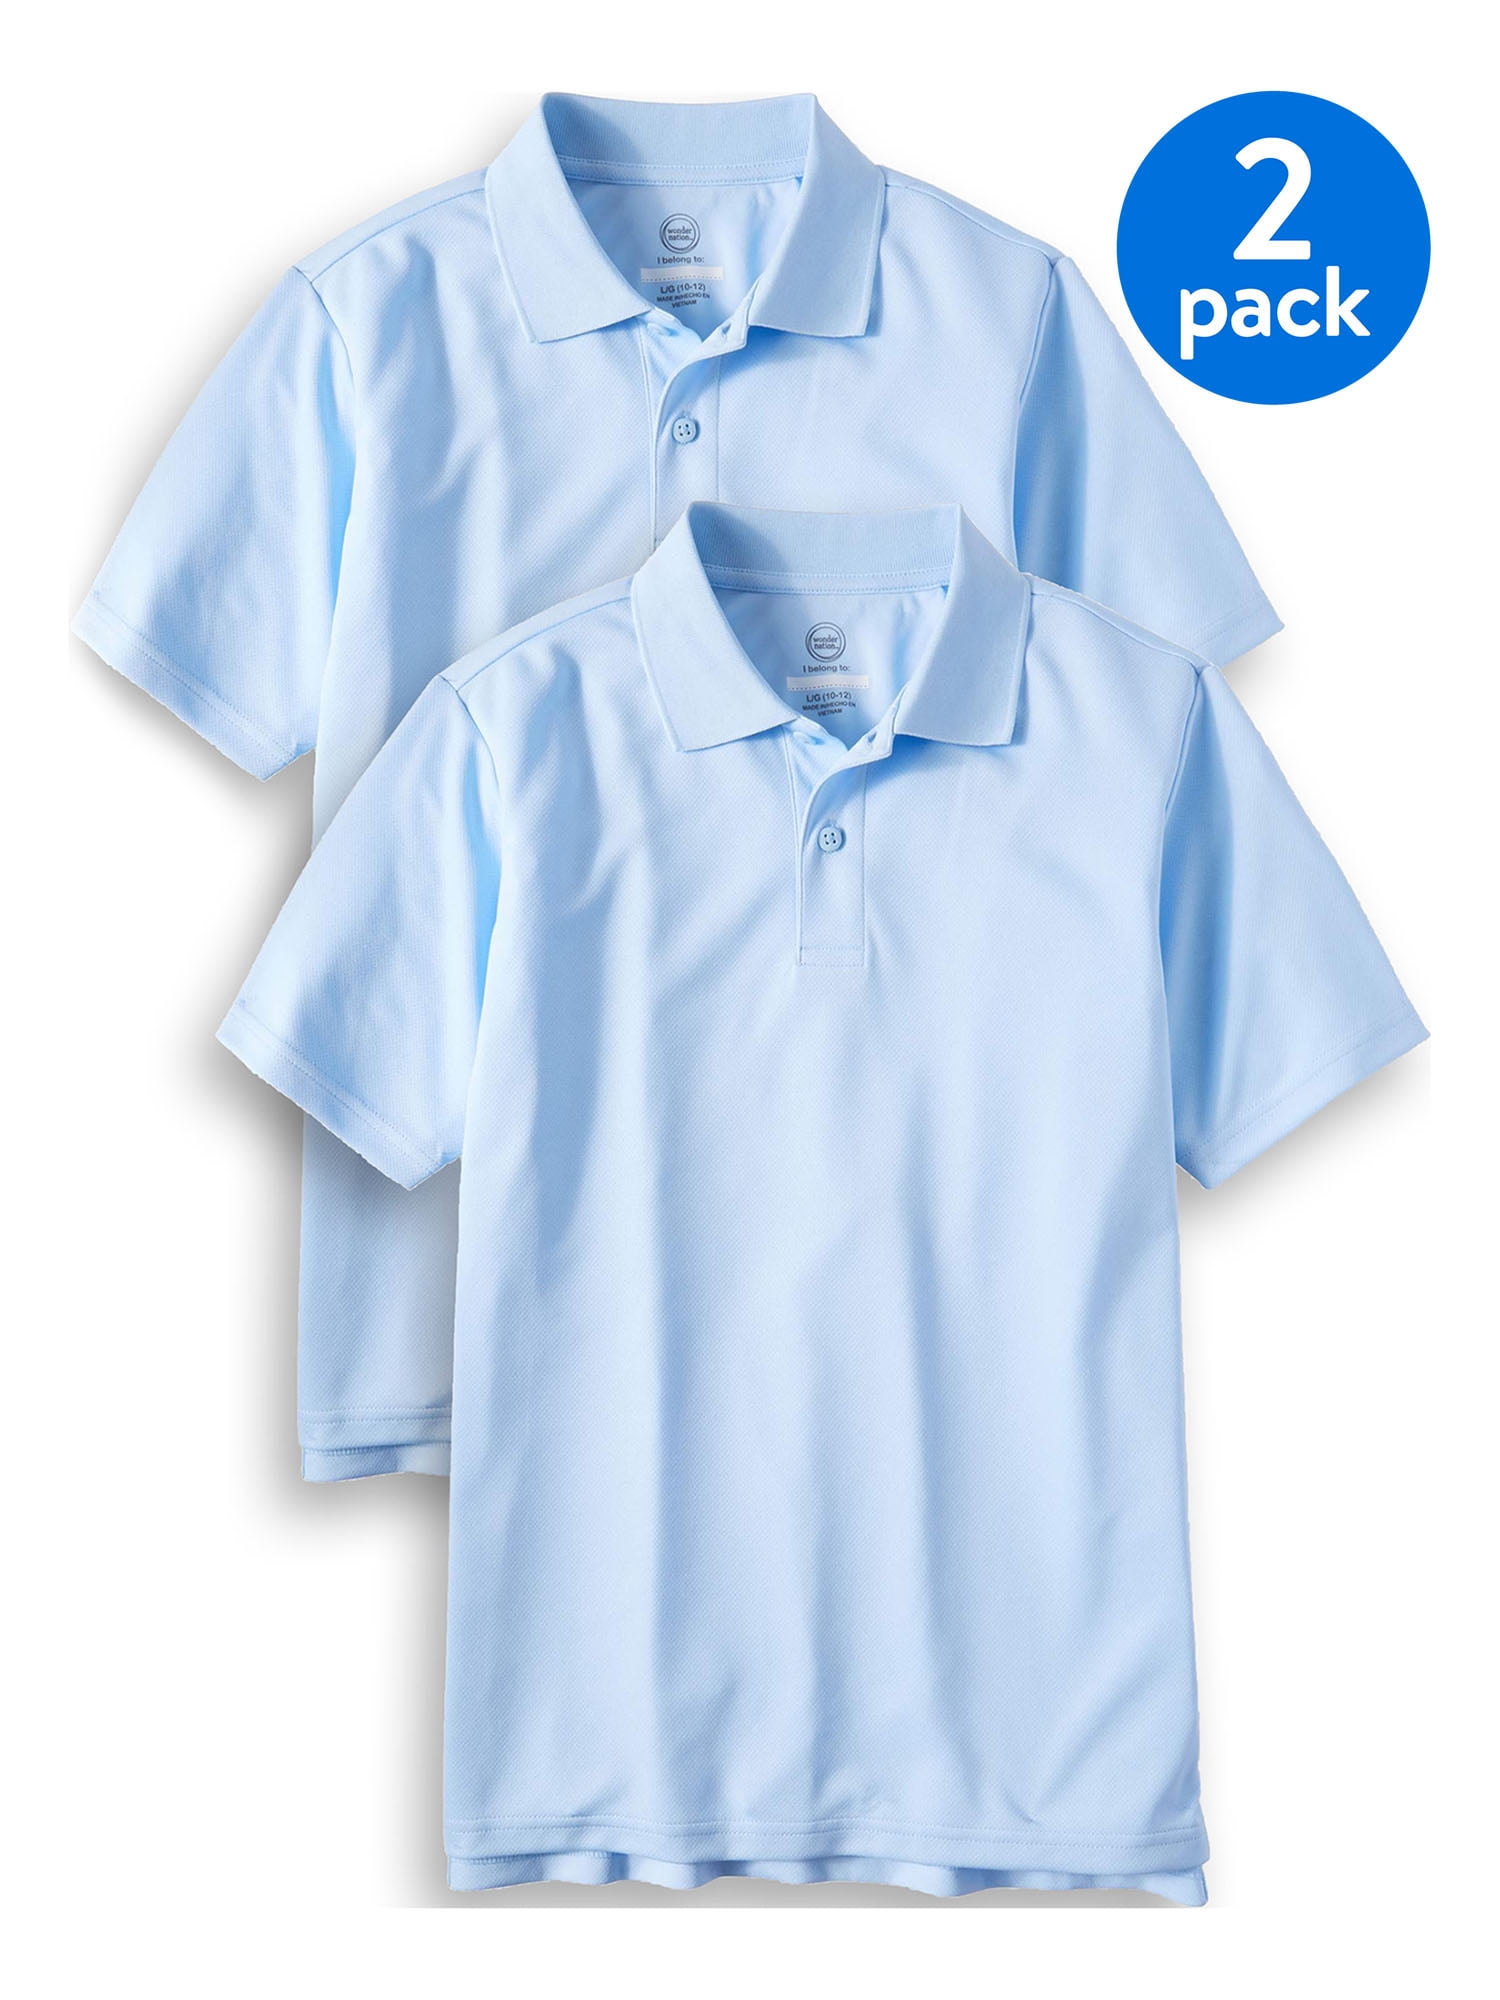 Boys 2 PACK BHS Fabric Protector Non Iron Slim Fit Short Sleeve School Shirt 